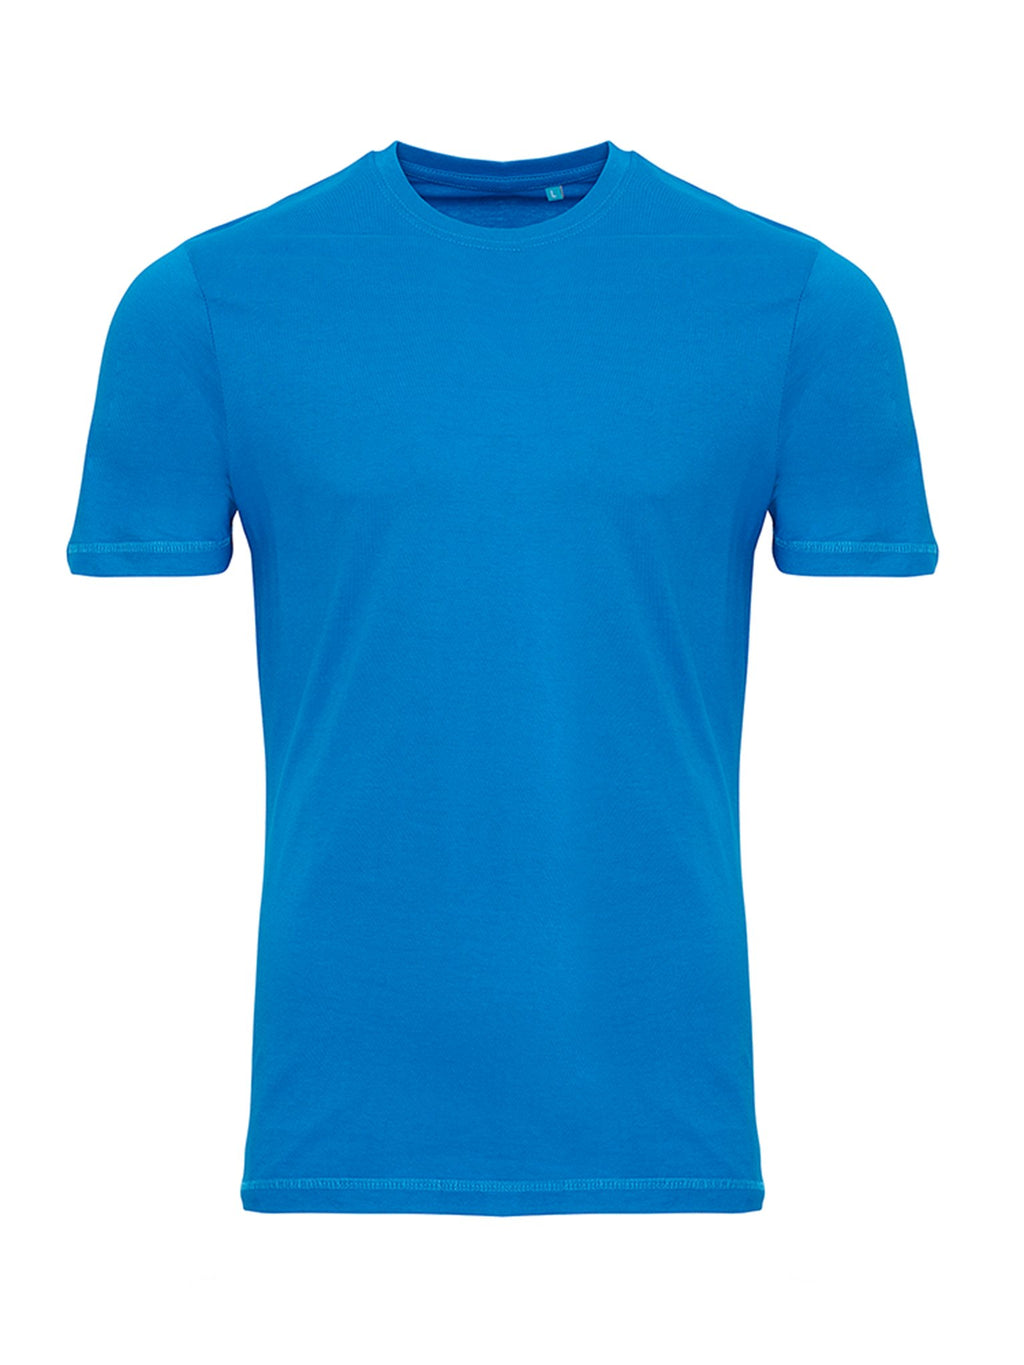 Camiseta básica orgánica - azul turquesa